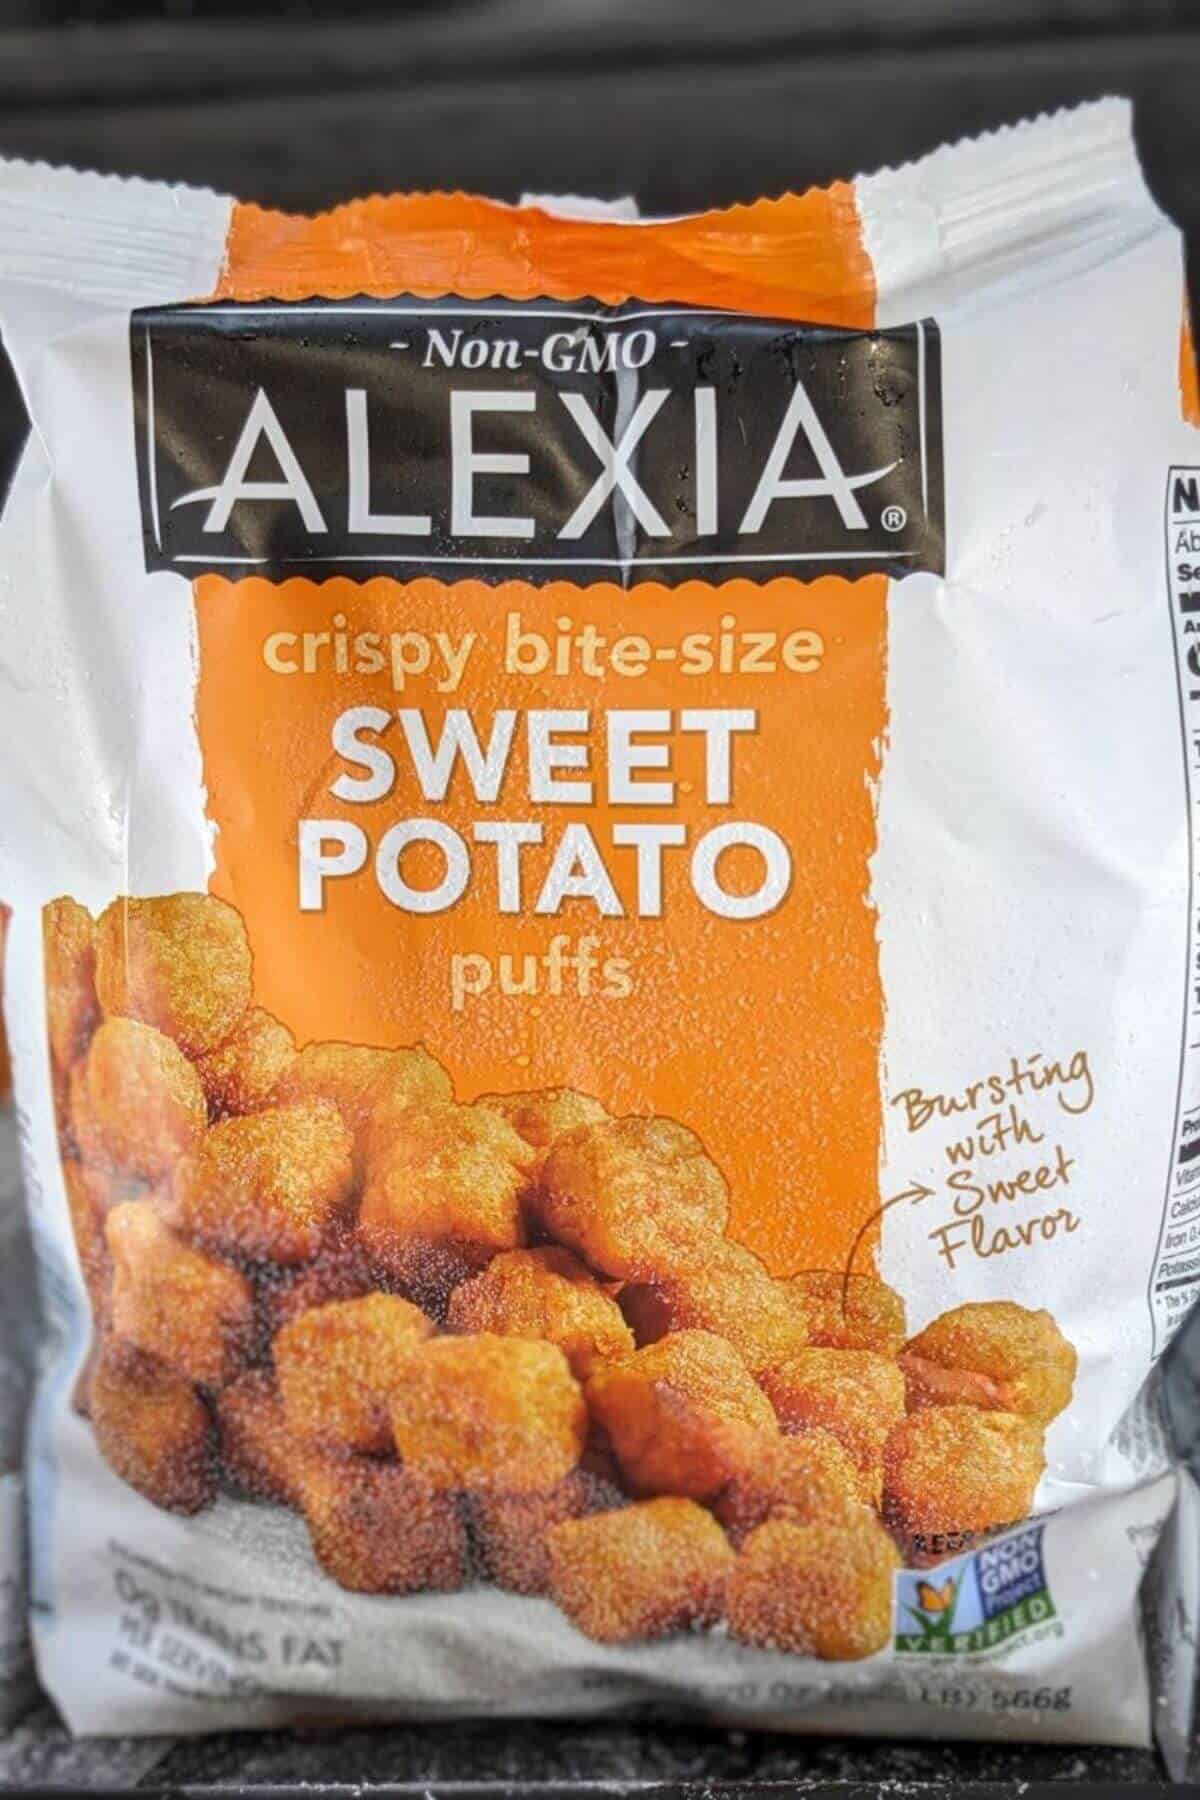 A bag of frozen Alexia sweet potato puffs.